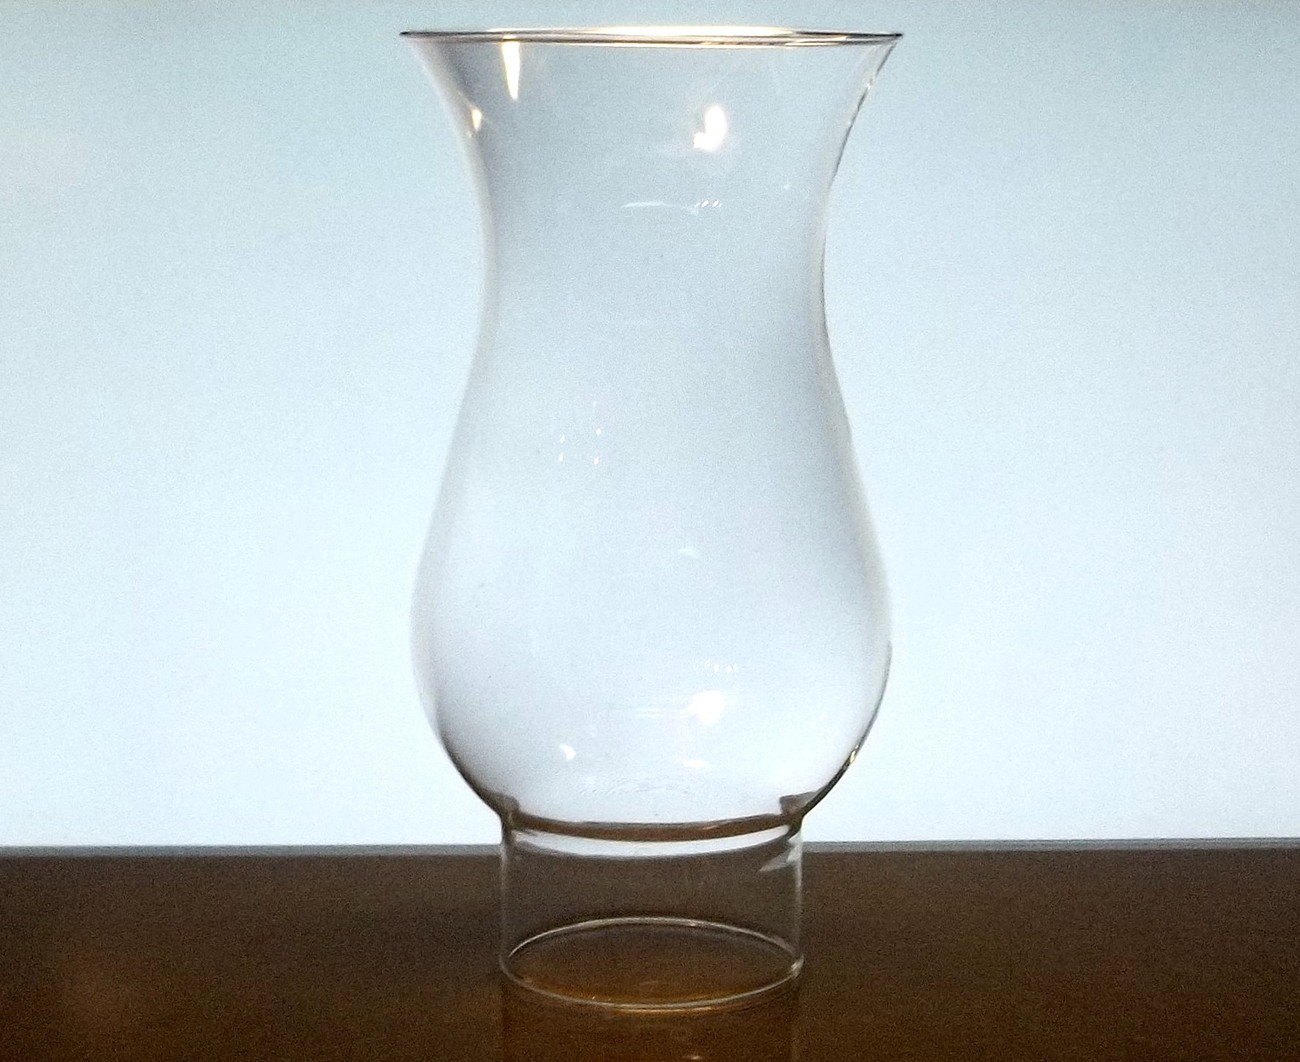 Hurricane lantern glass replacement